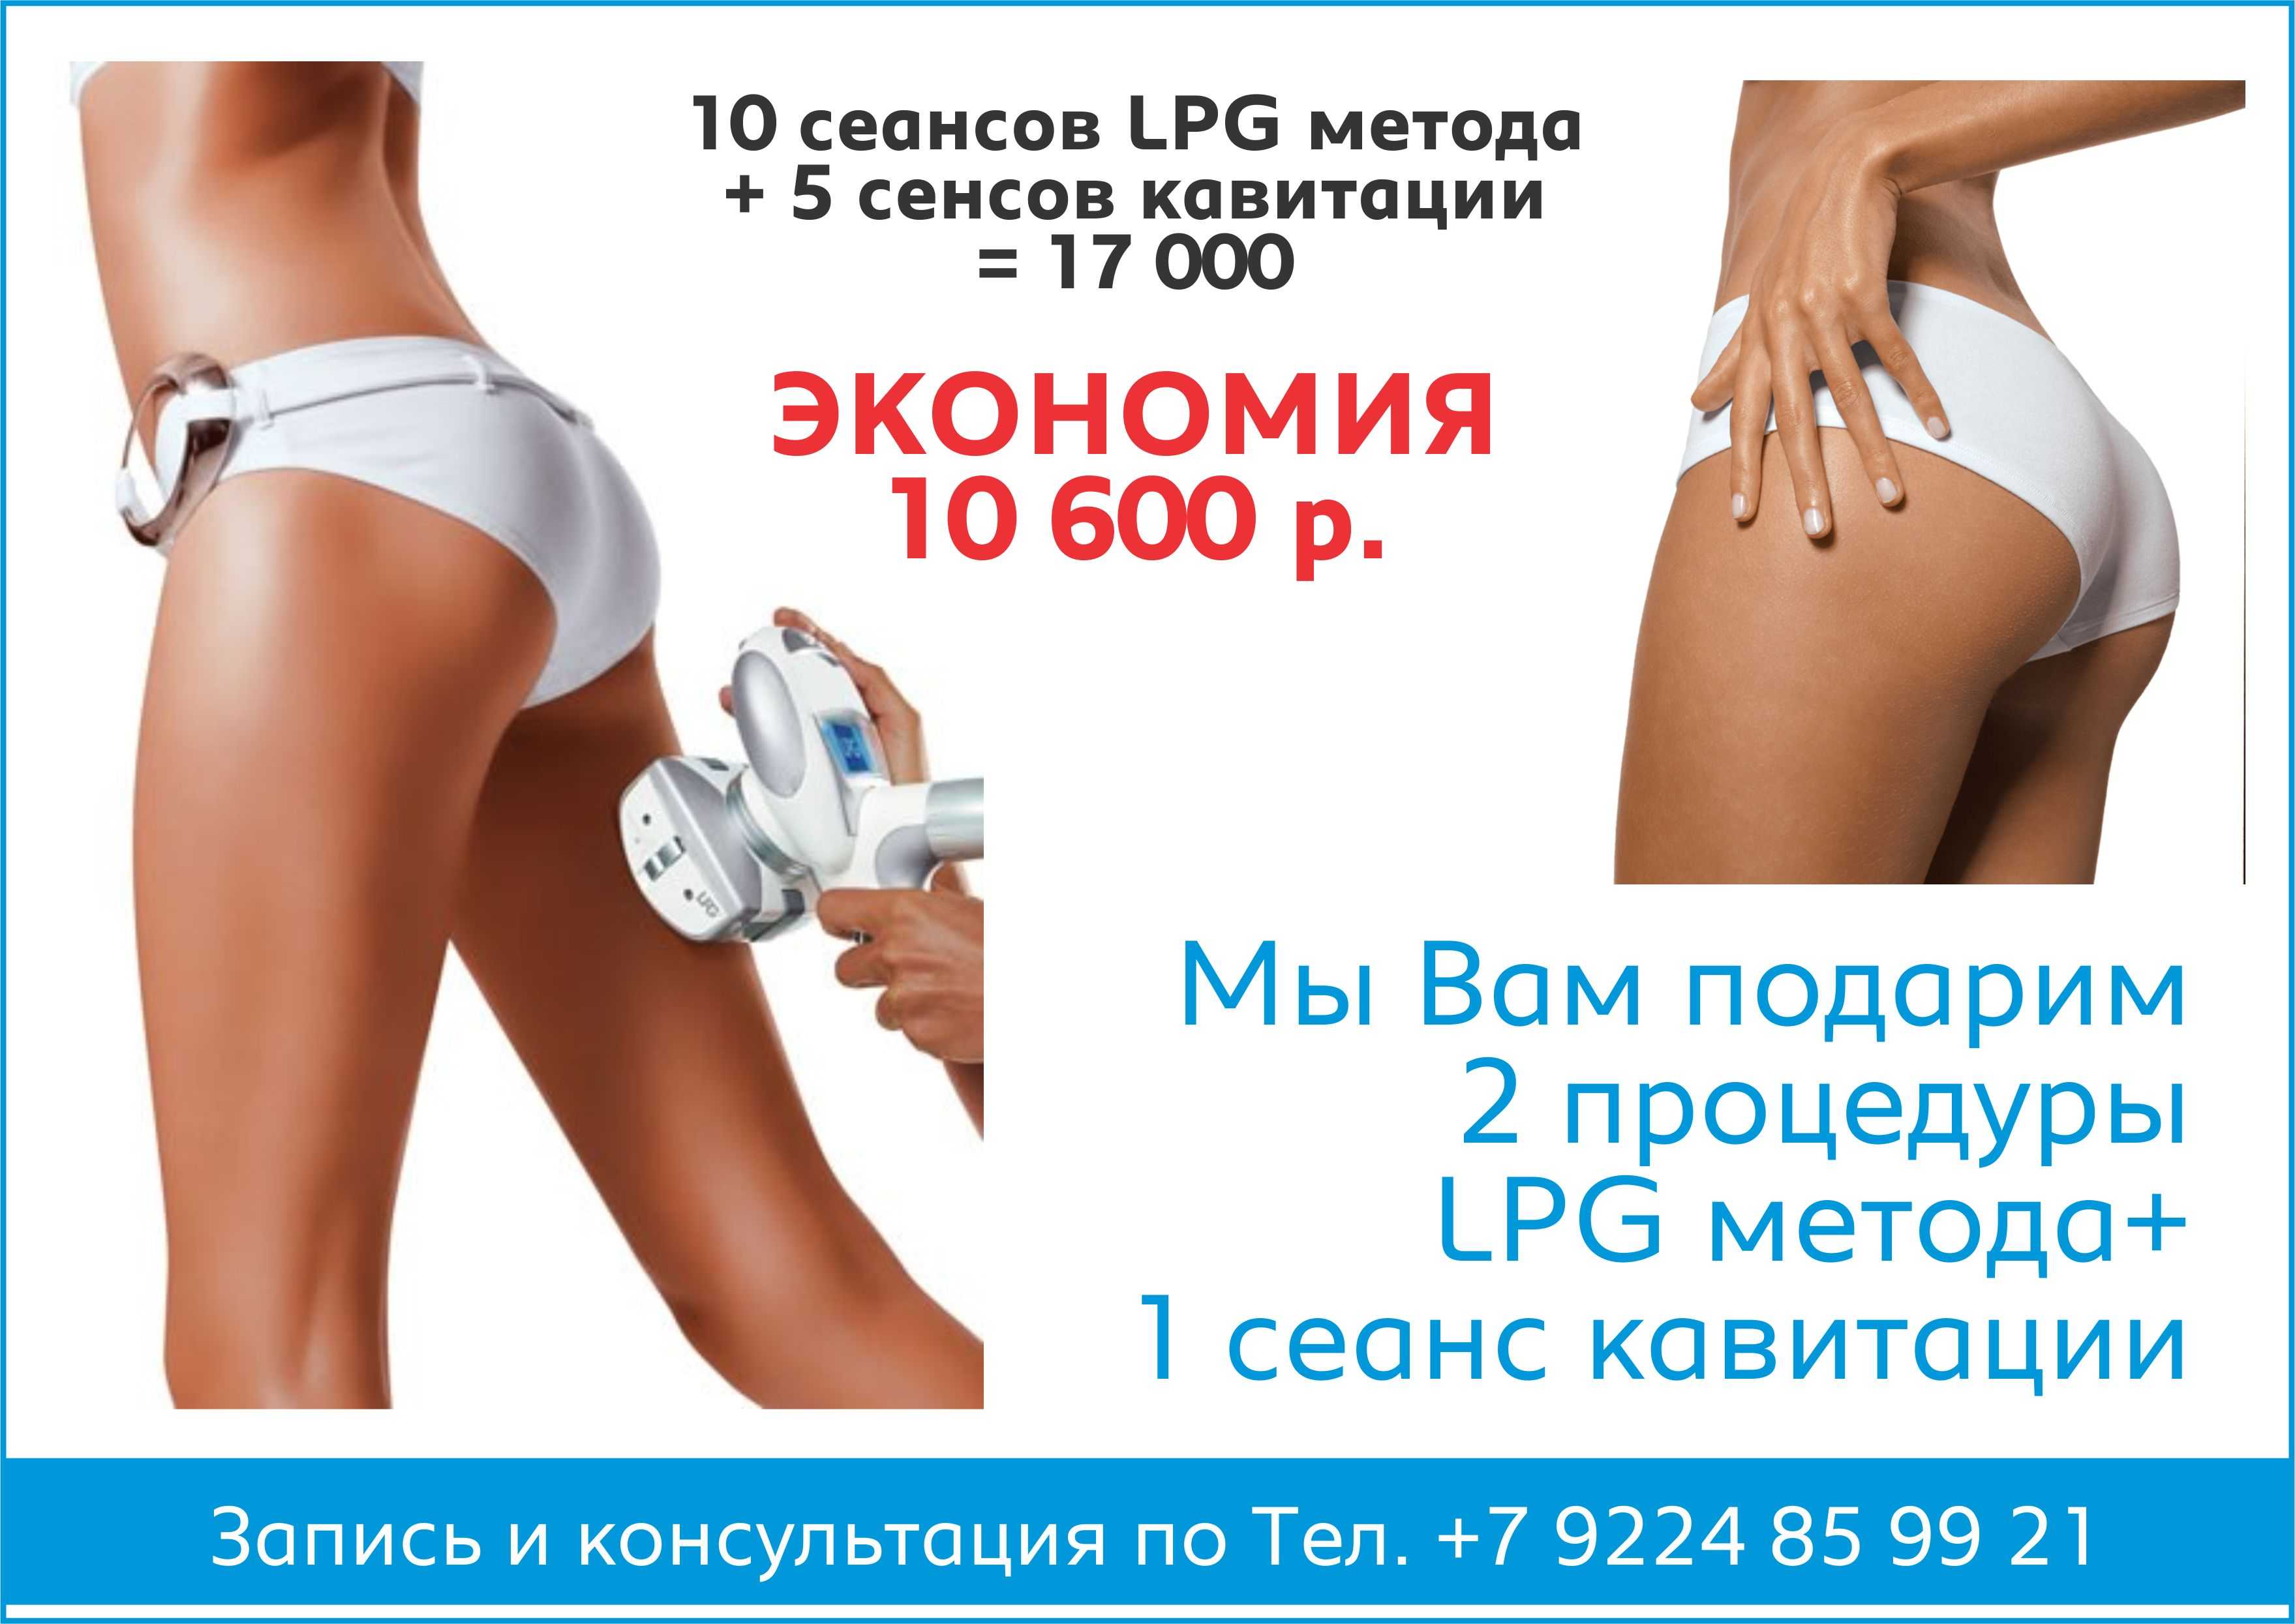 Lpg массаж форум. Вакуумный массаж лпж. Ролико-вакуумный массаж LPG. Аппаратный массаж для похудения LPG. LPG массаж акция.